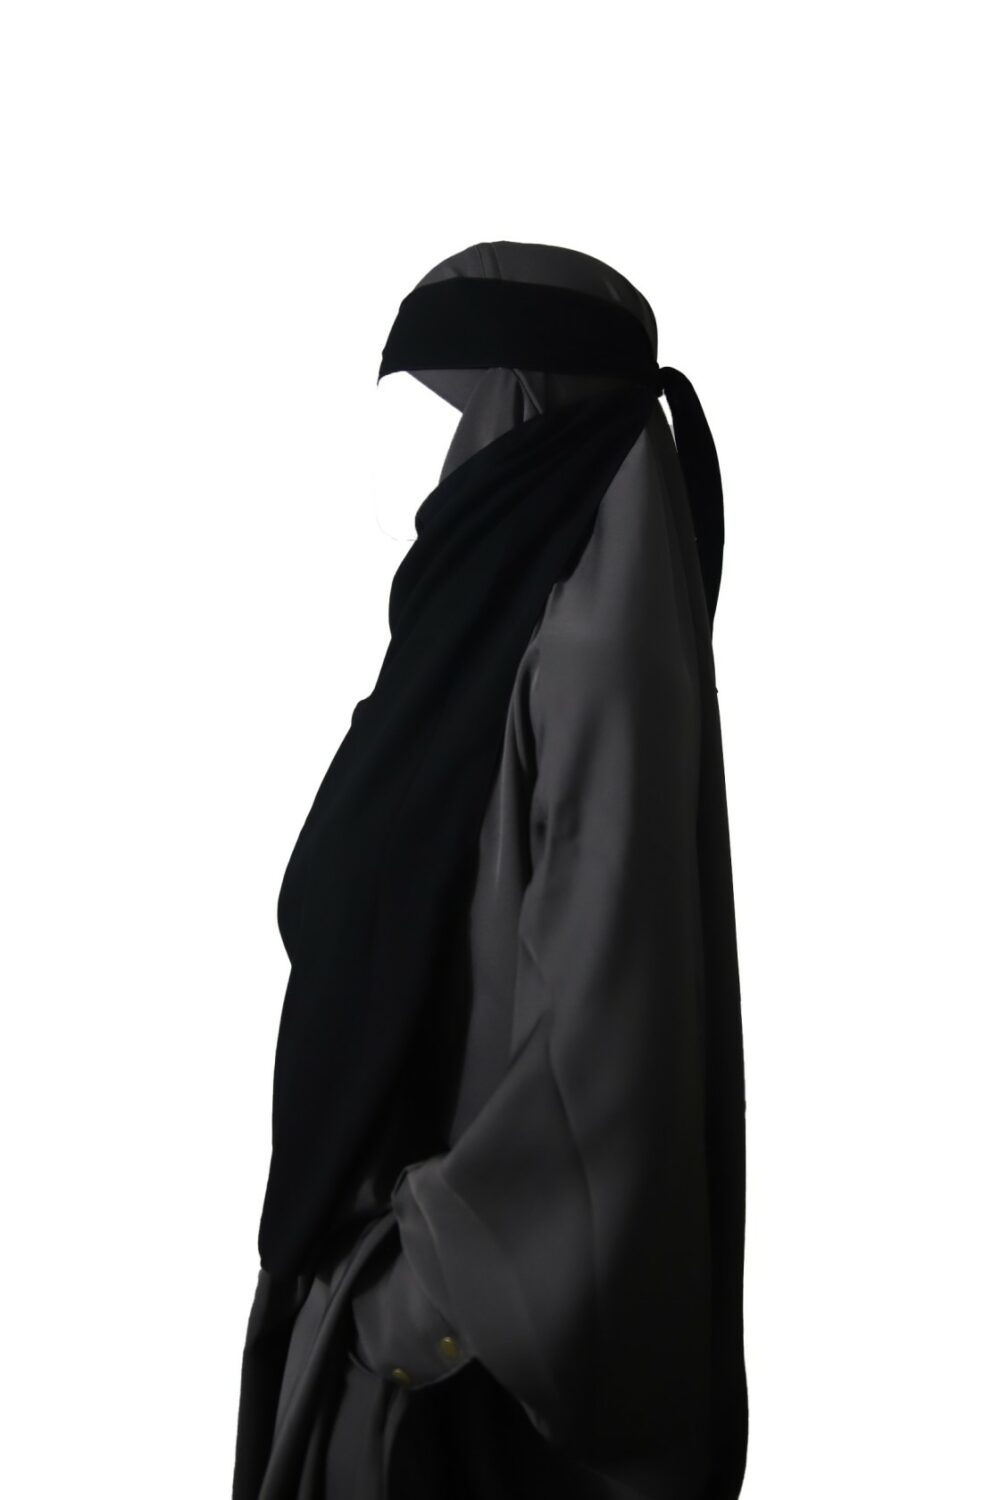 pull down niqab show face